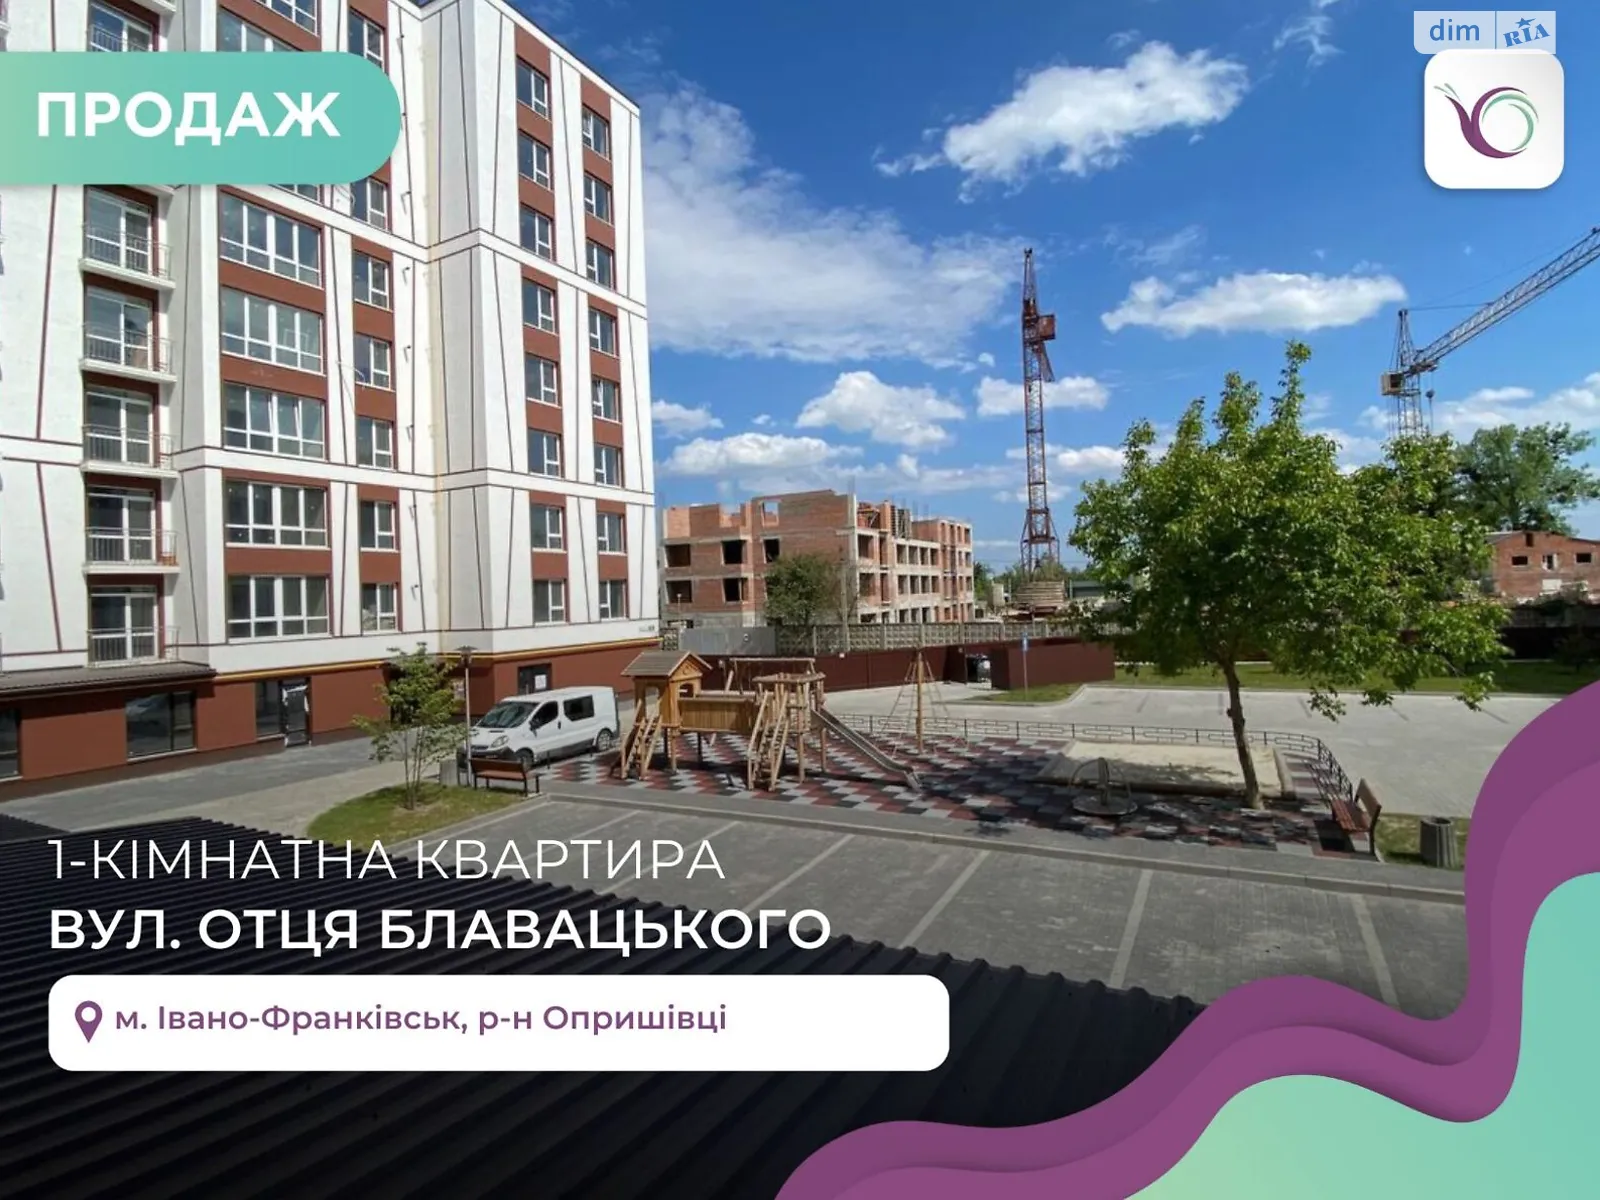 Продается 1-комнатная квартира 38.1 кв. м в Ивано-Франковске, ул. Отца Блавацкого - фото 1